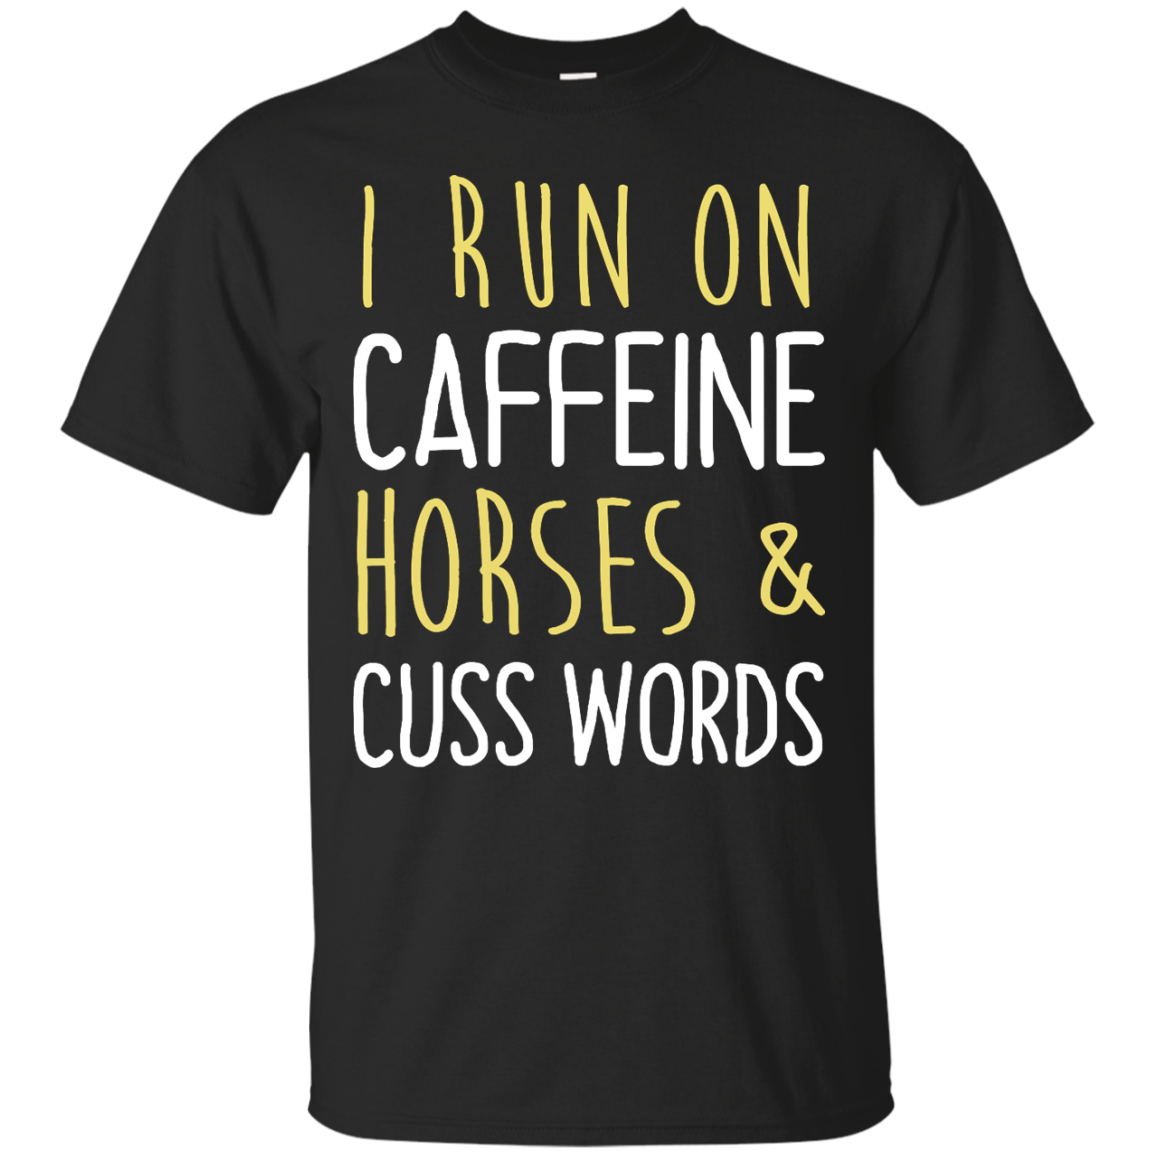 I run on caffeine, horses & cuss words shirt, tank, sweater